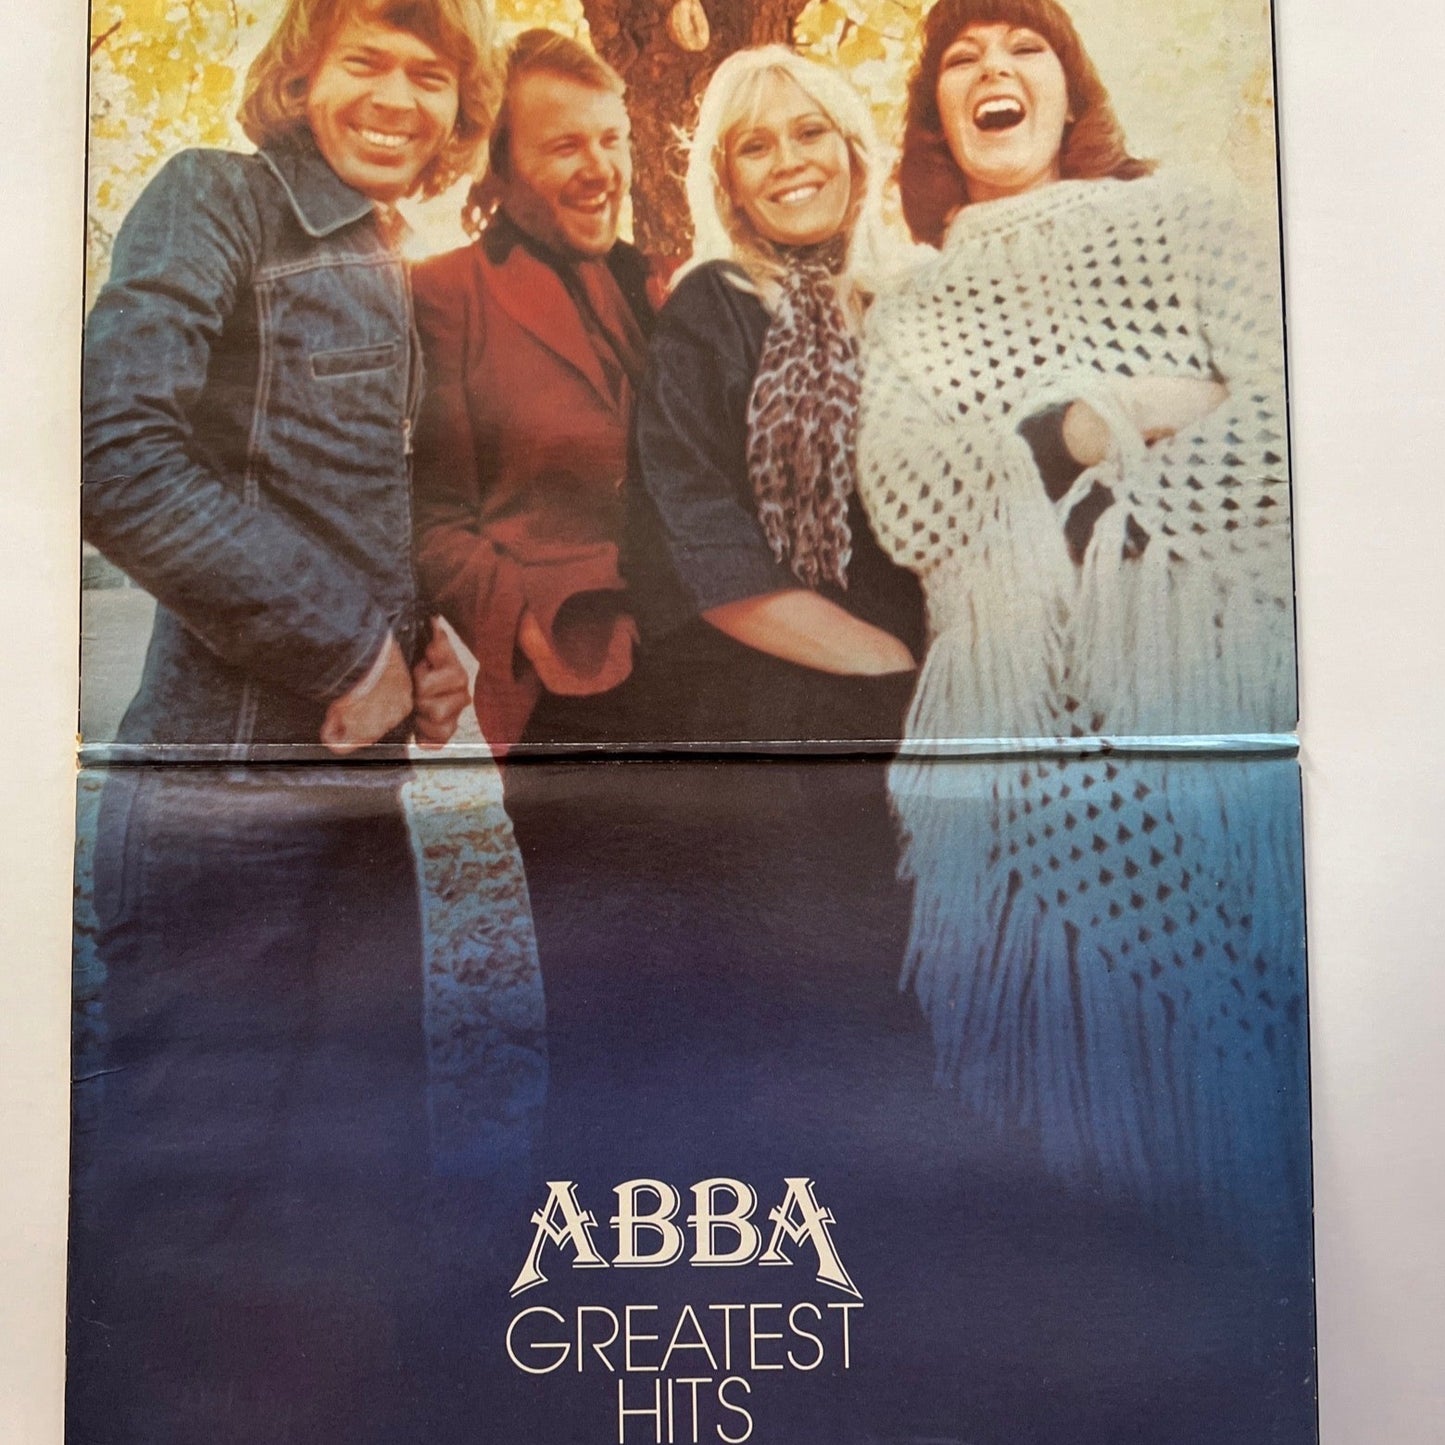 ABBA “Greatest Hits”